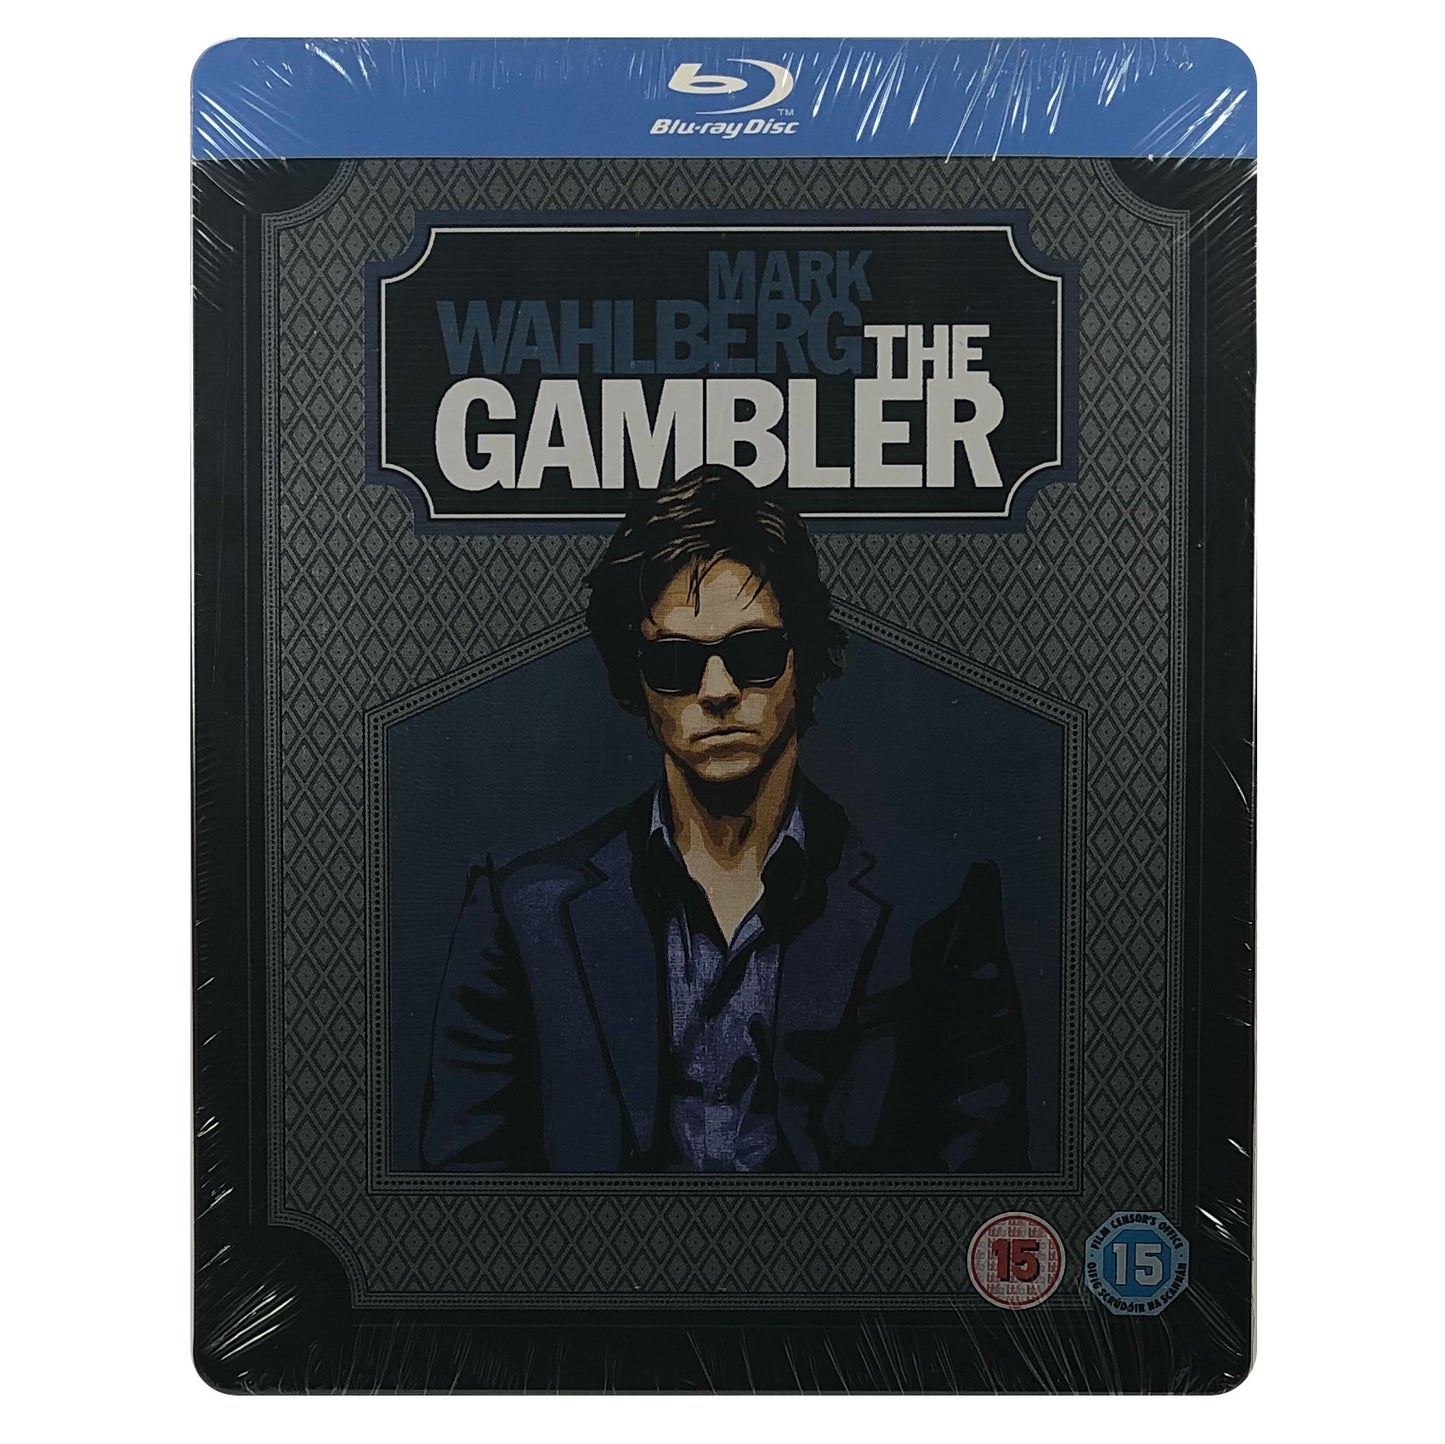 The Gambler Blu-Ray Steelbook